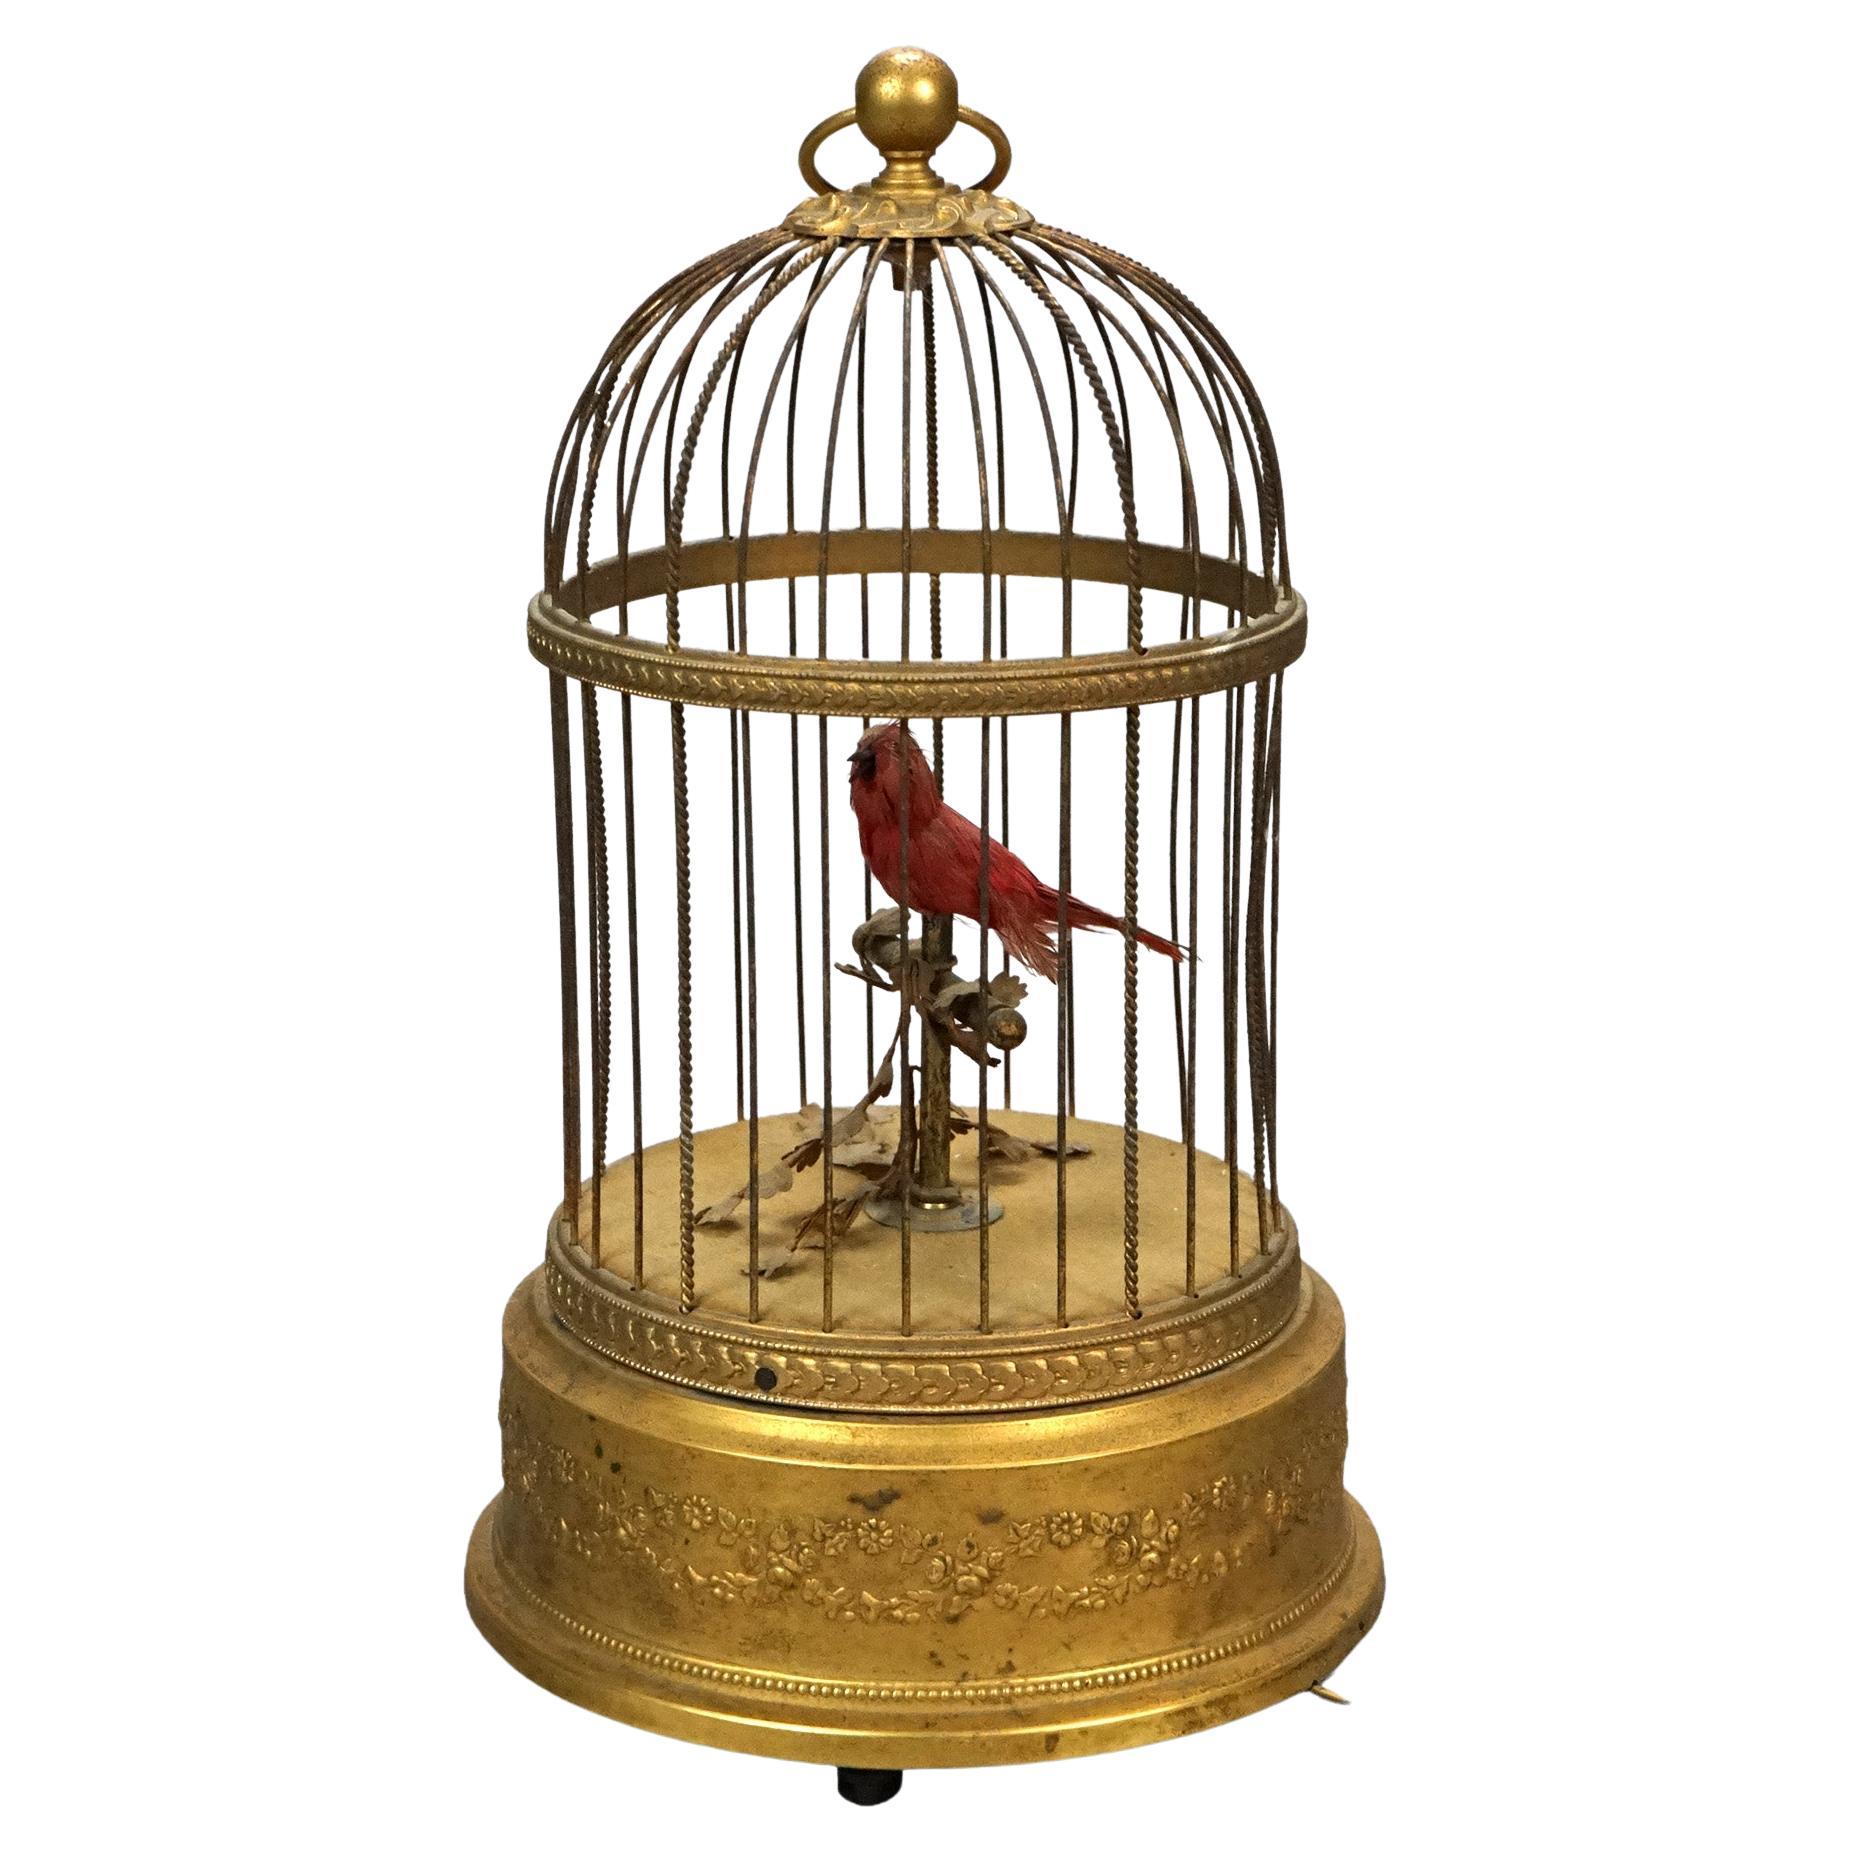 Antique French Singing Bird Cage Automaton, Circa 1890